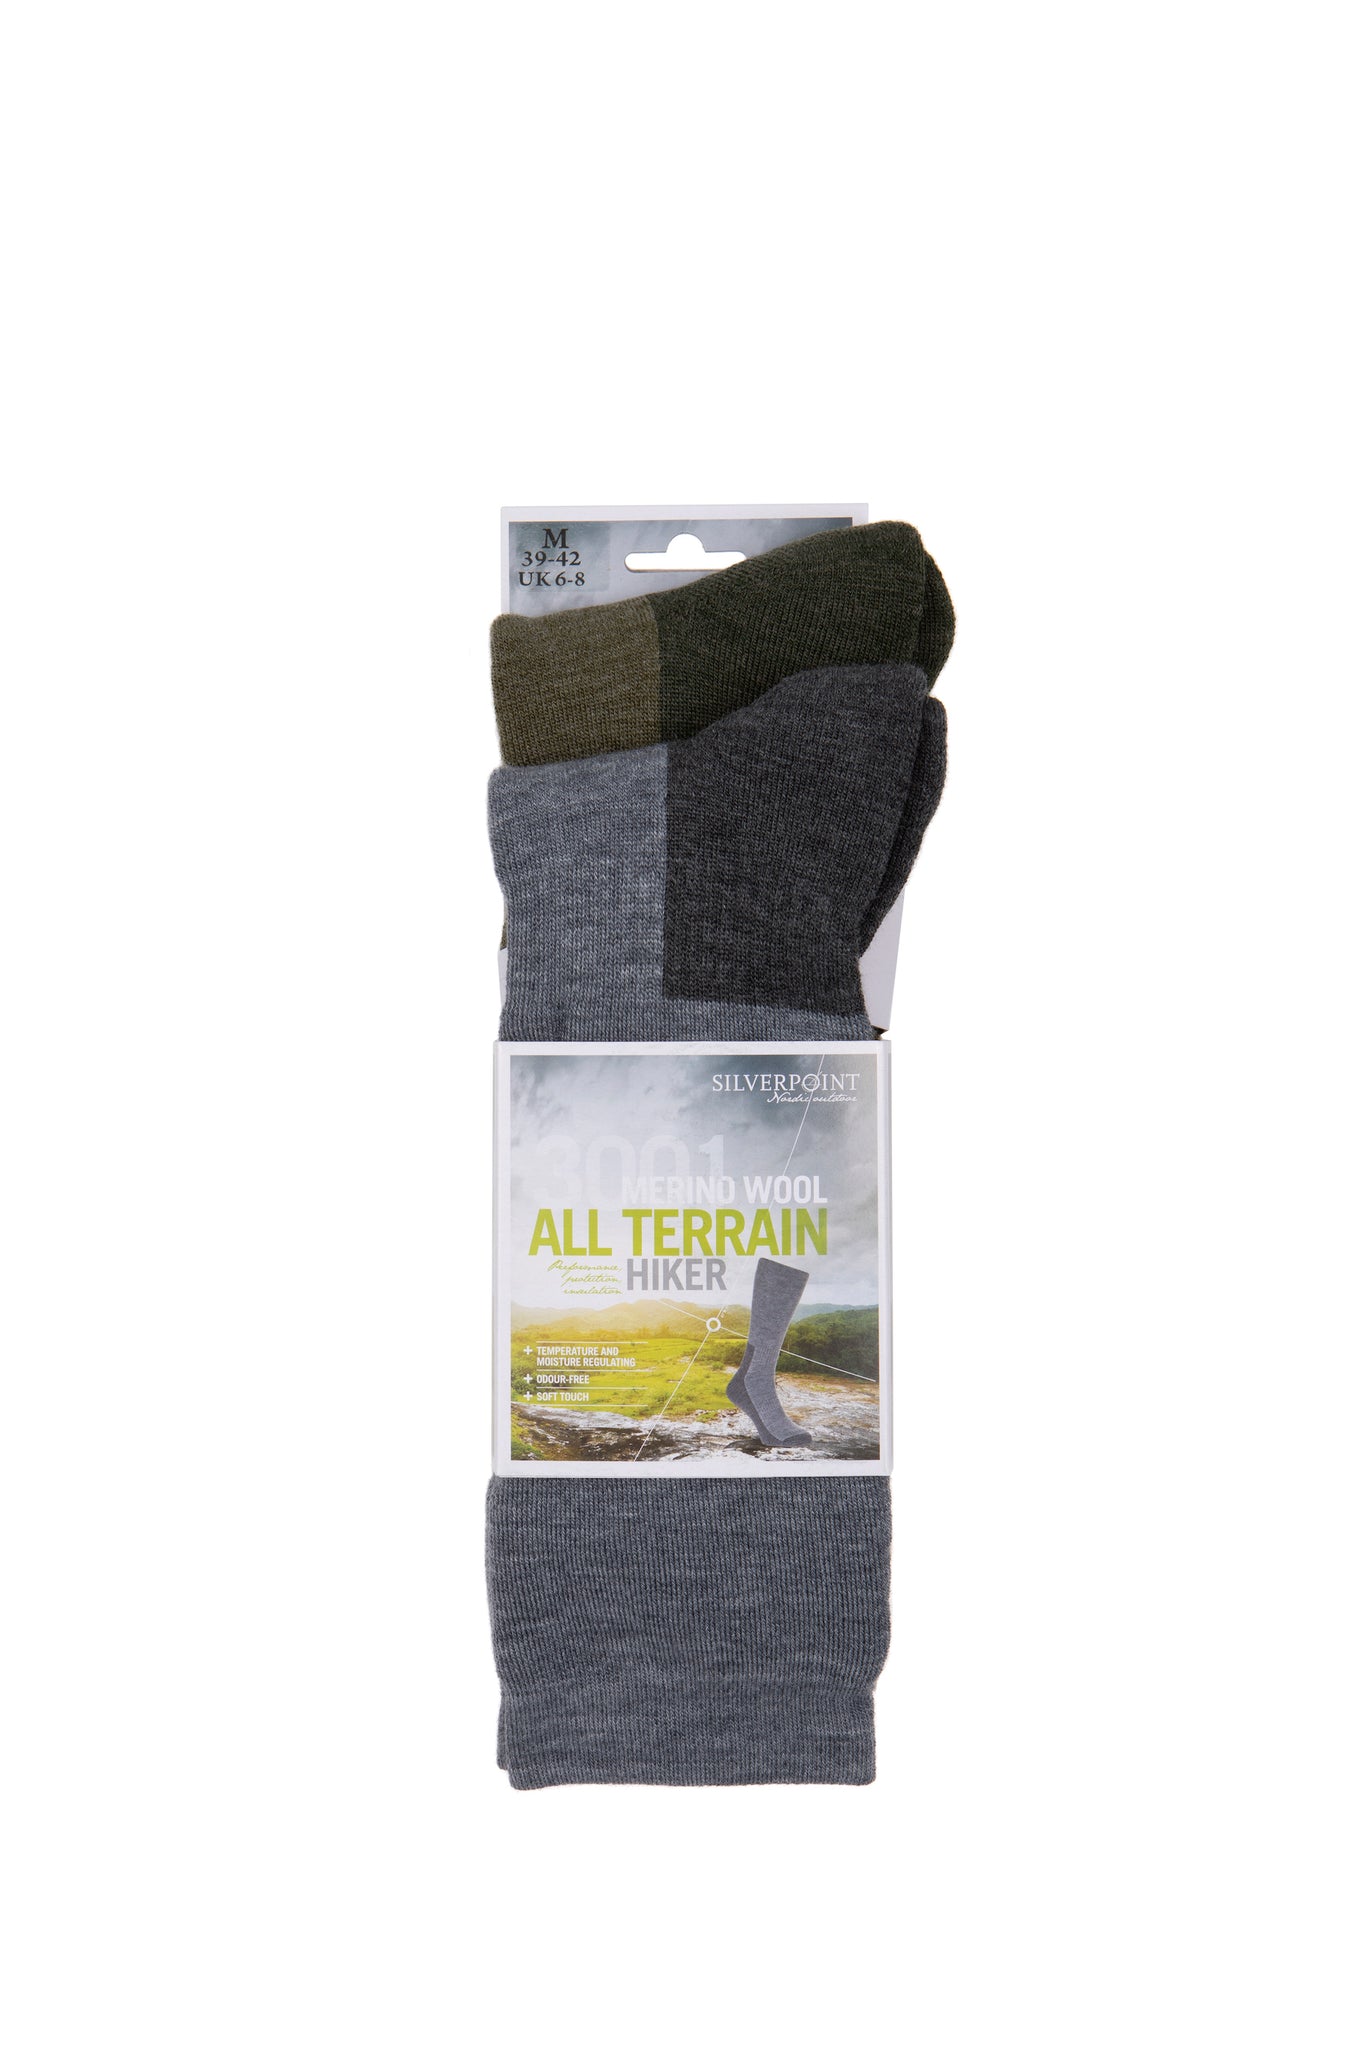 All Terrain Hiker Socks (Twin Pack)